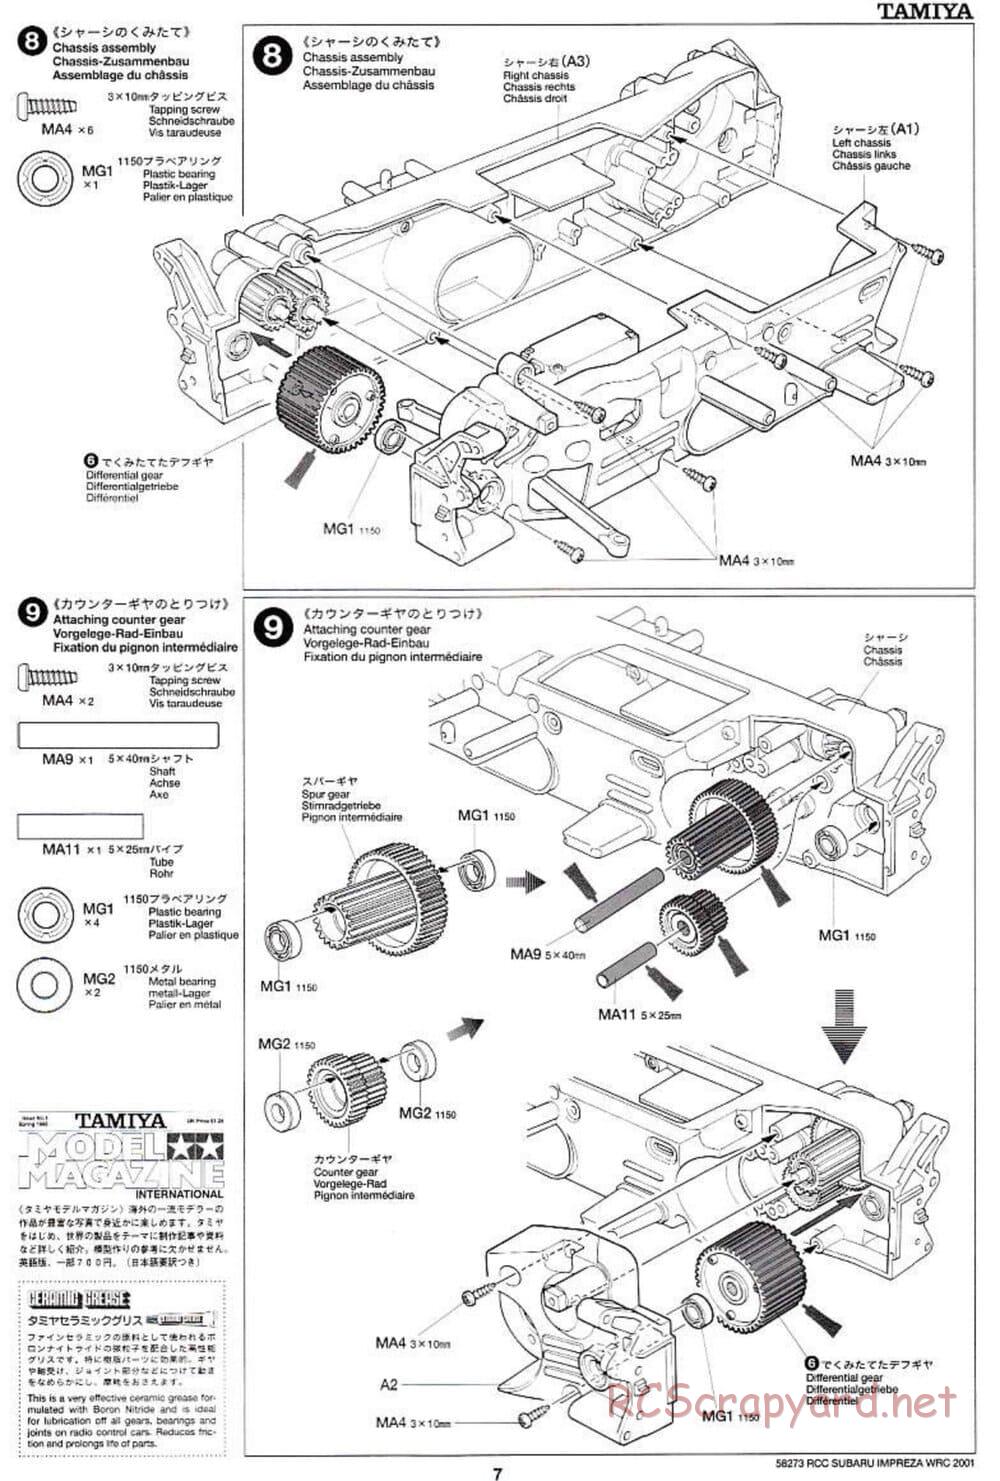 Tamiya - Subaru Impreza WRC 2001 - TL-01 Chassis - Manual - Page 7